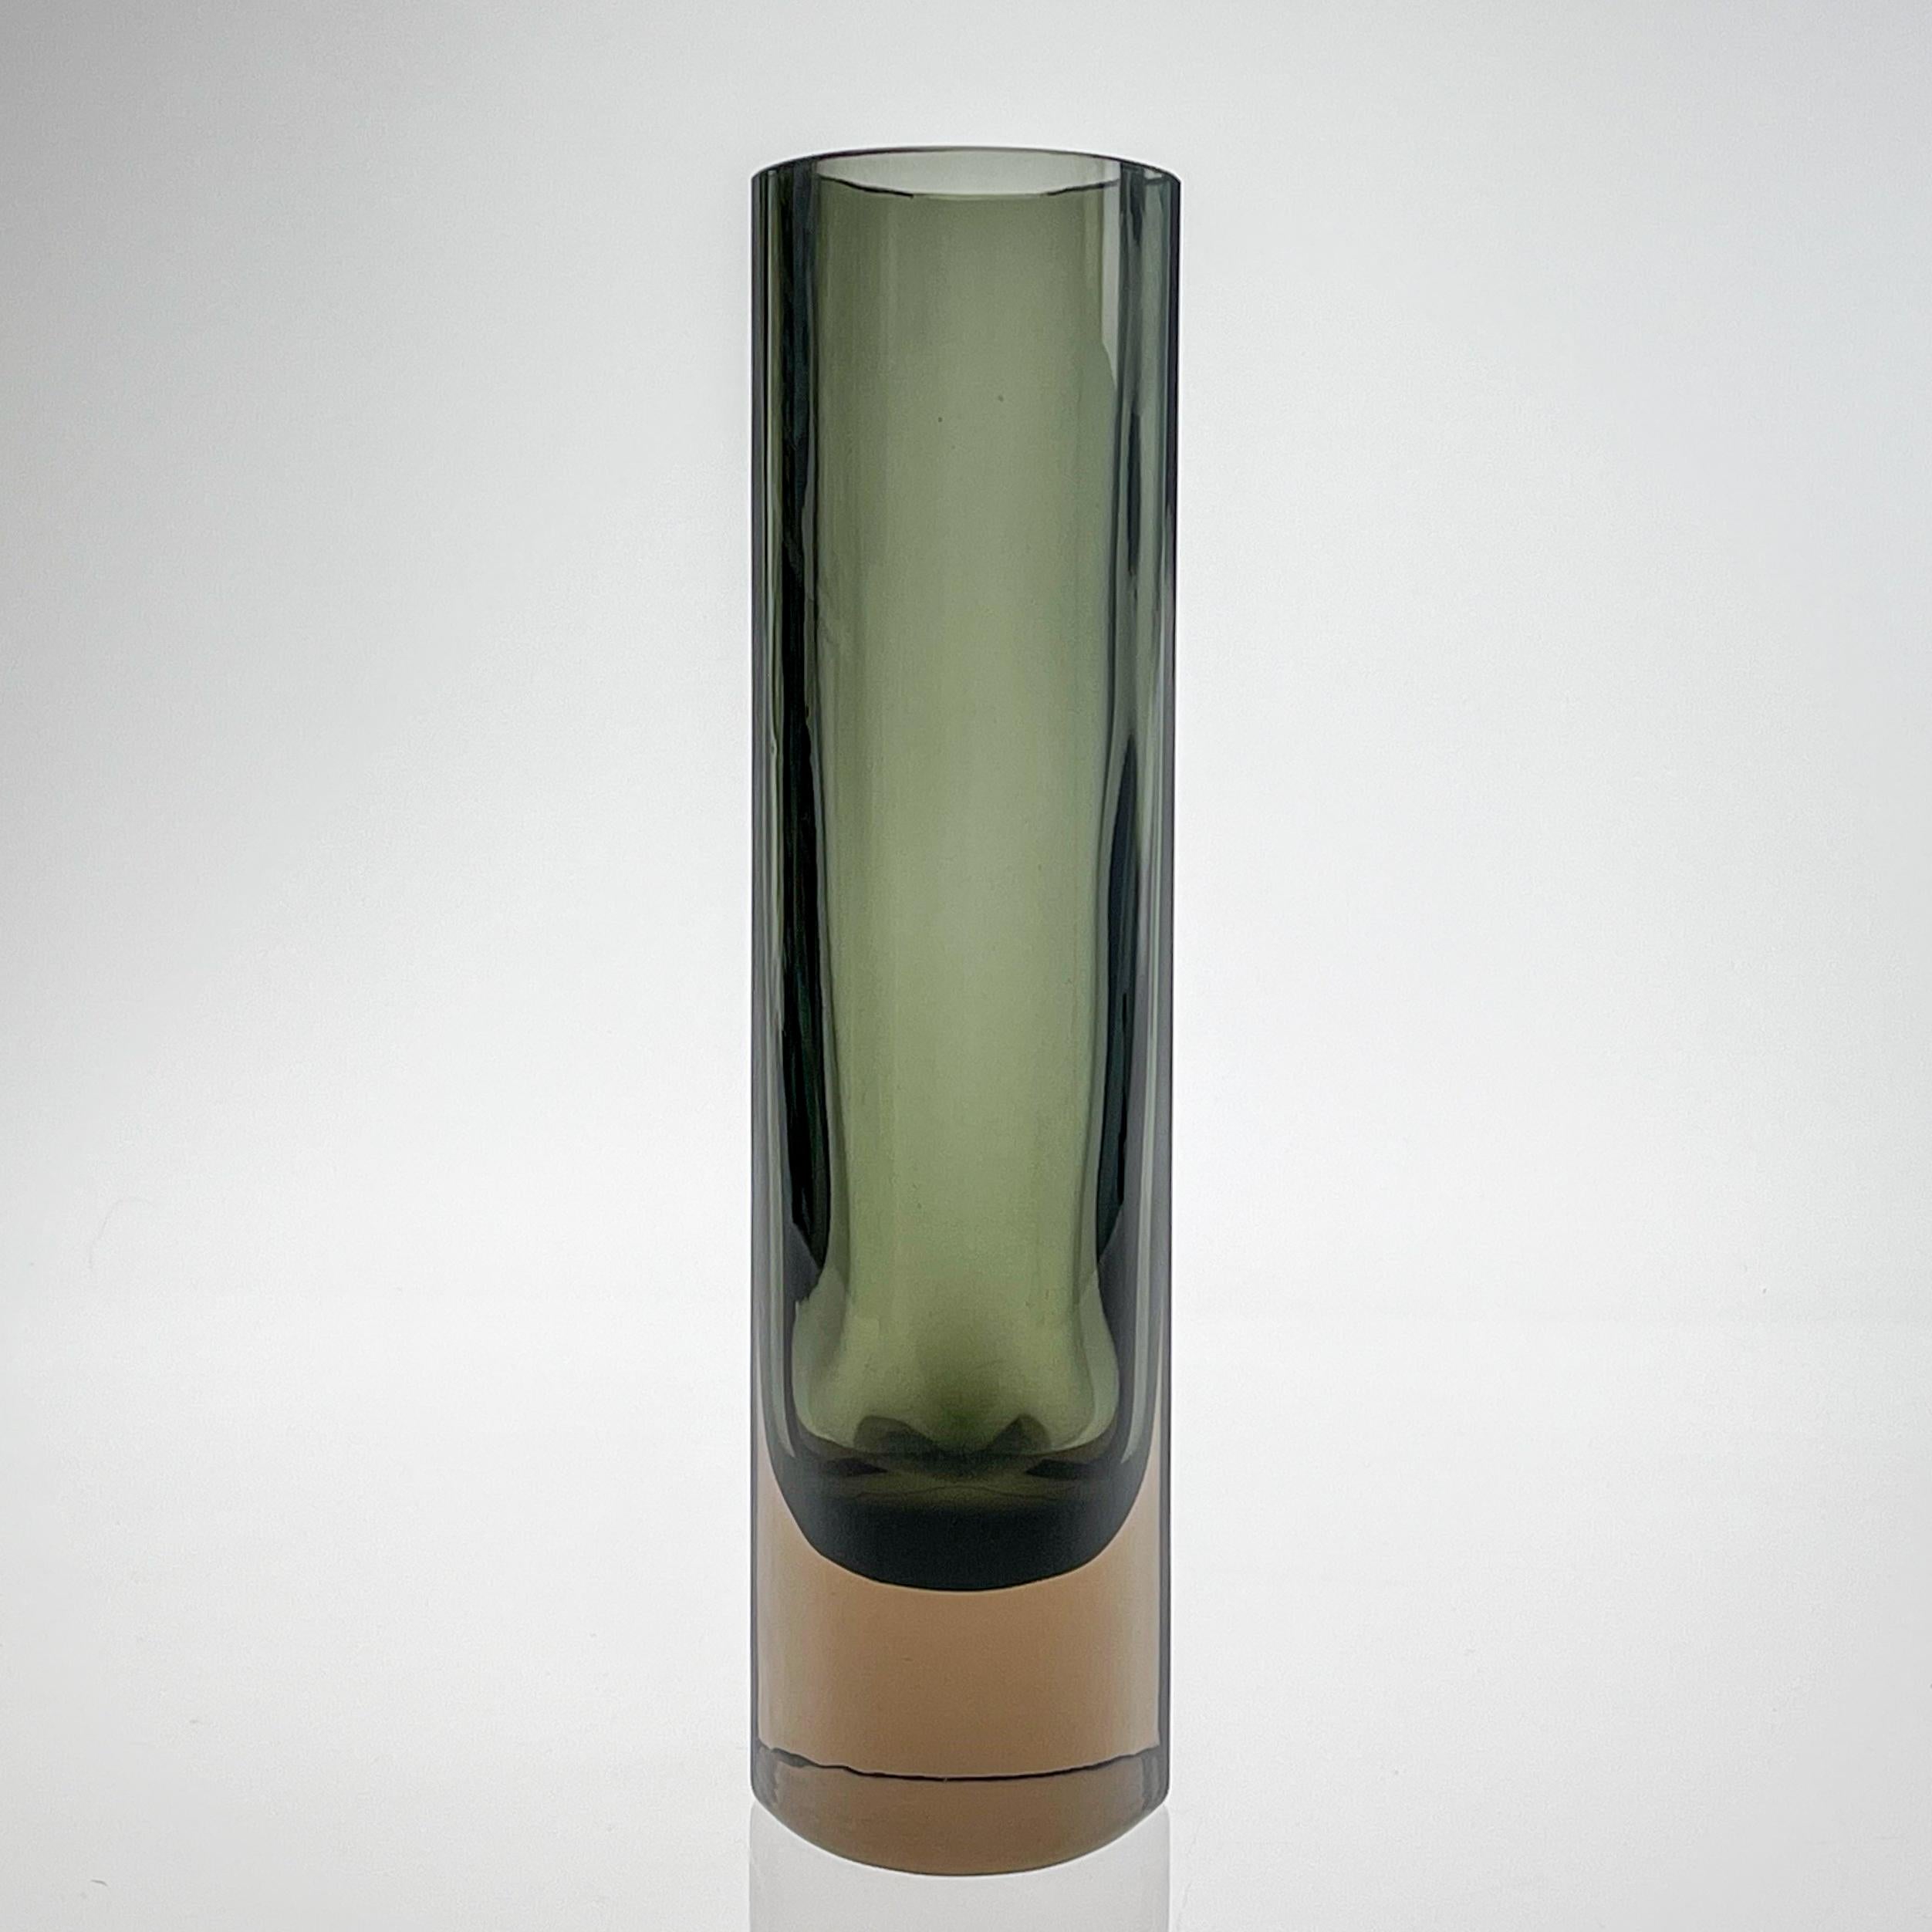 Finnish Scandinavian Modern Kaj Franck Art-Glass Vase Handblown Green Brown circa 1967 For Sale